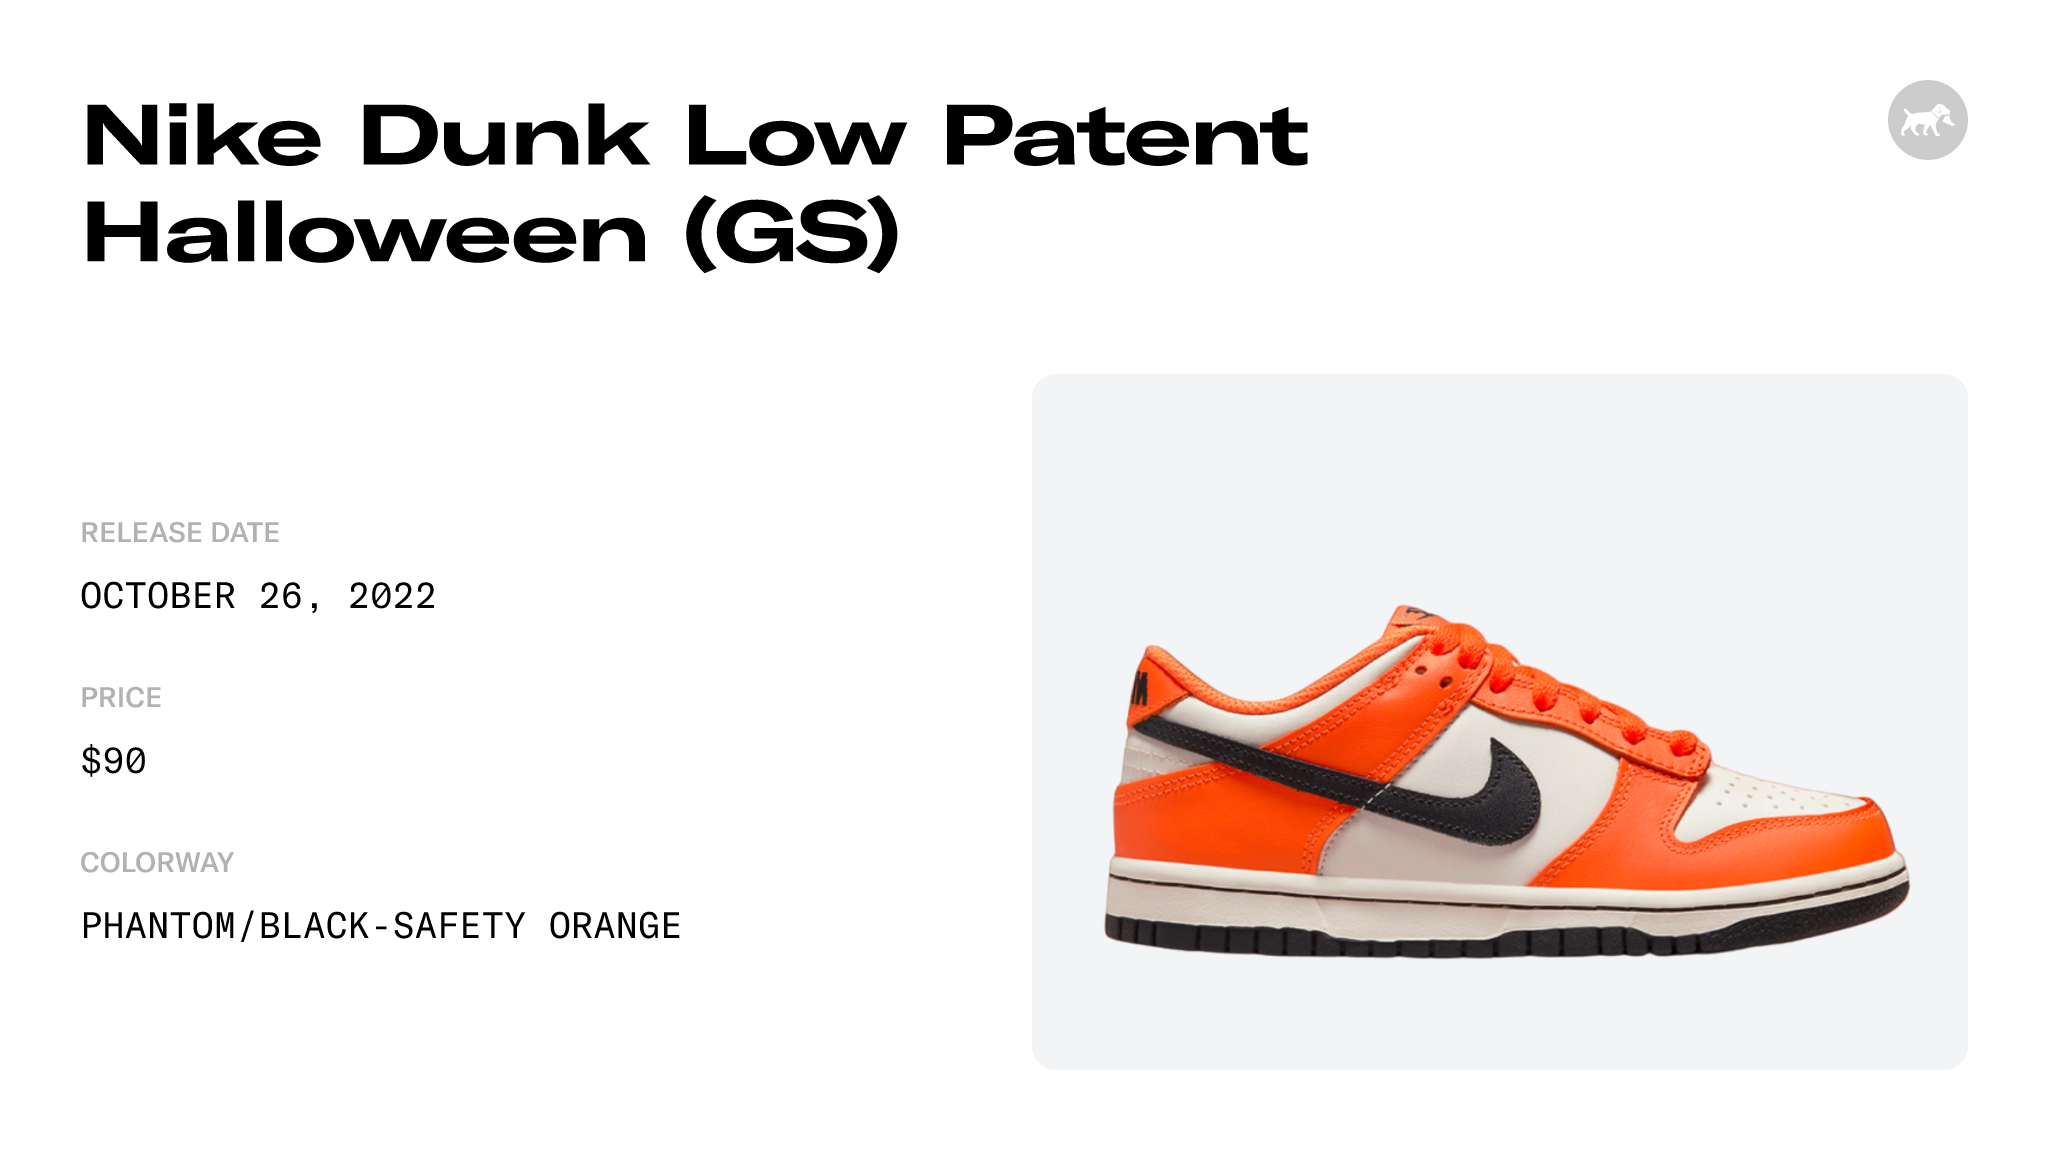 Nike Dunk Low GS Halloween 2022